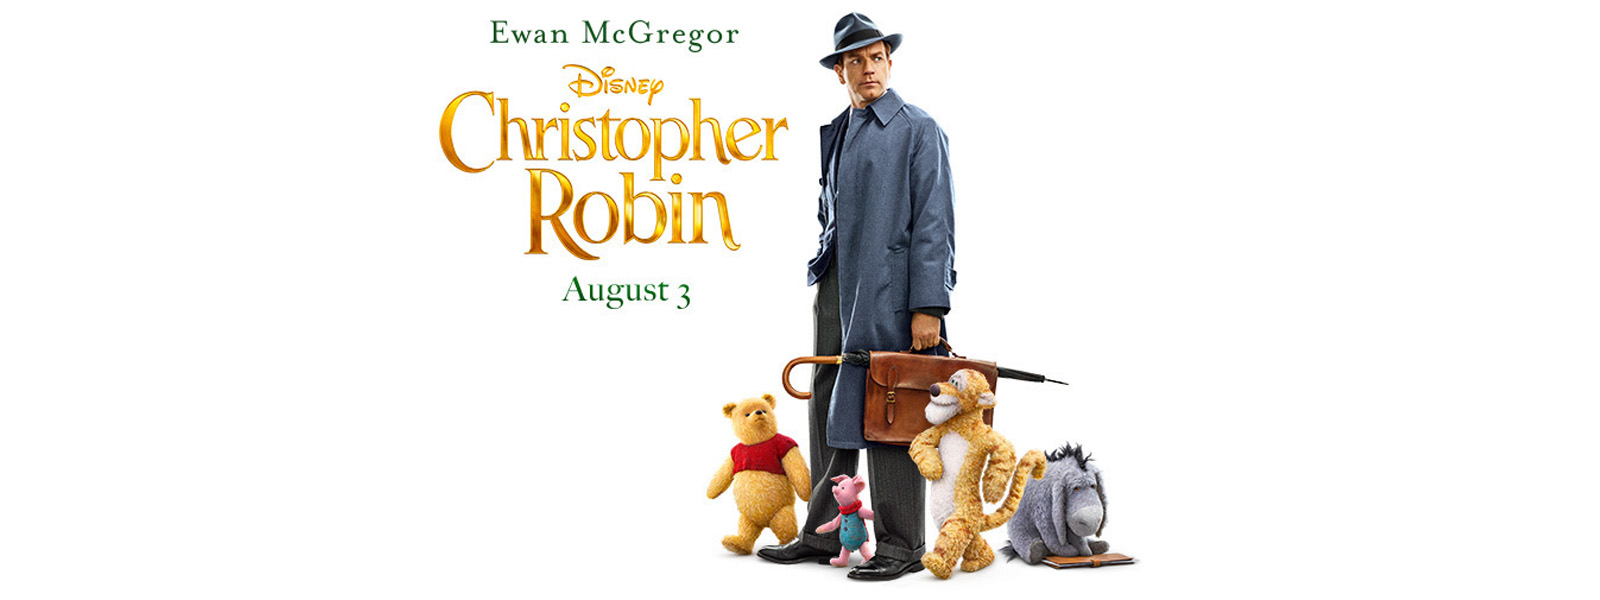  'Christopher Robin' makes world premiere 